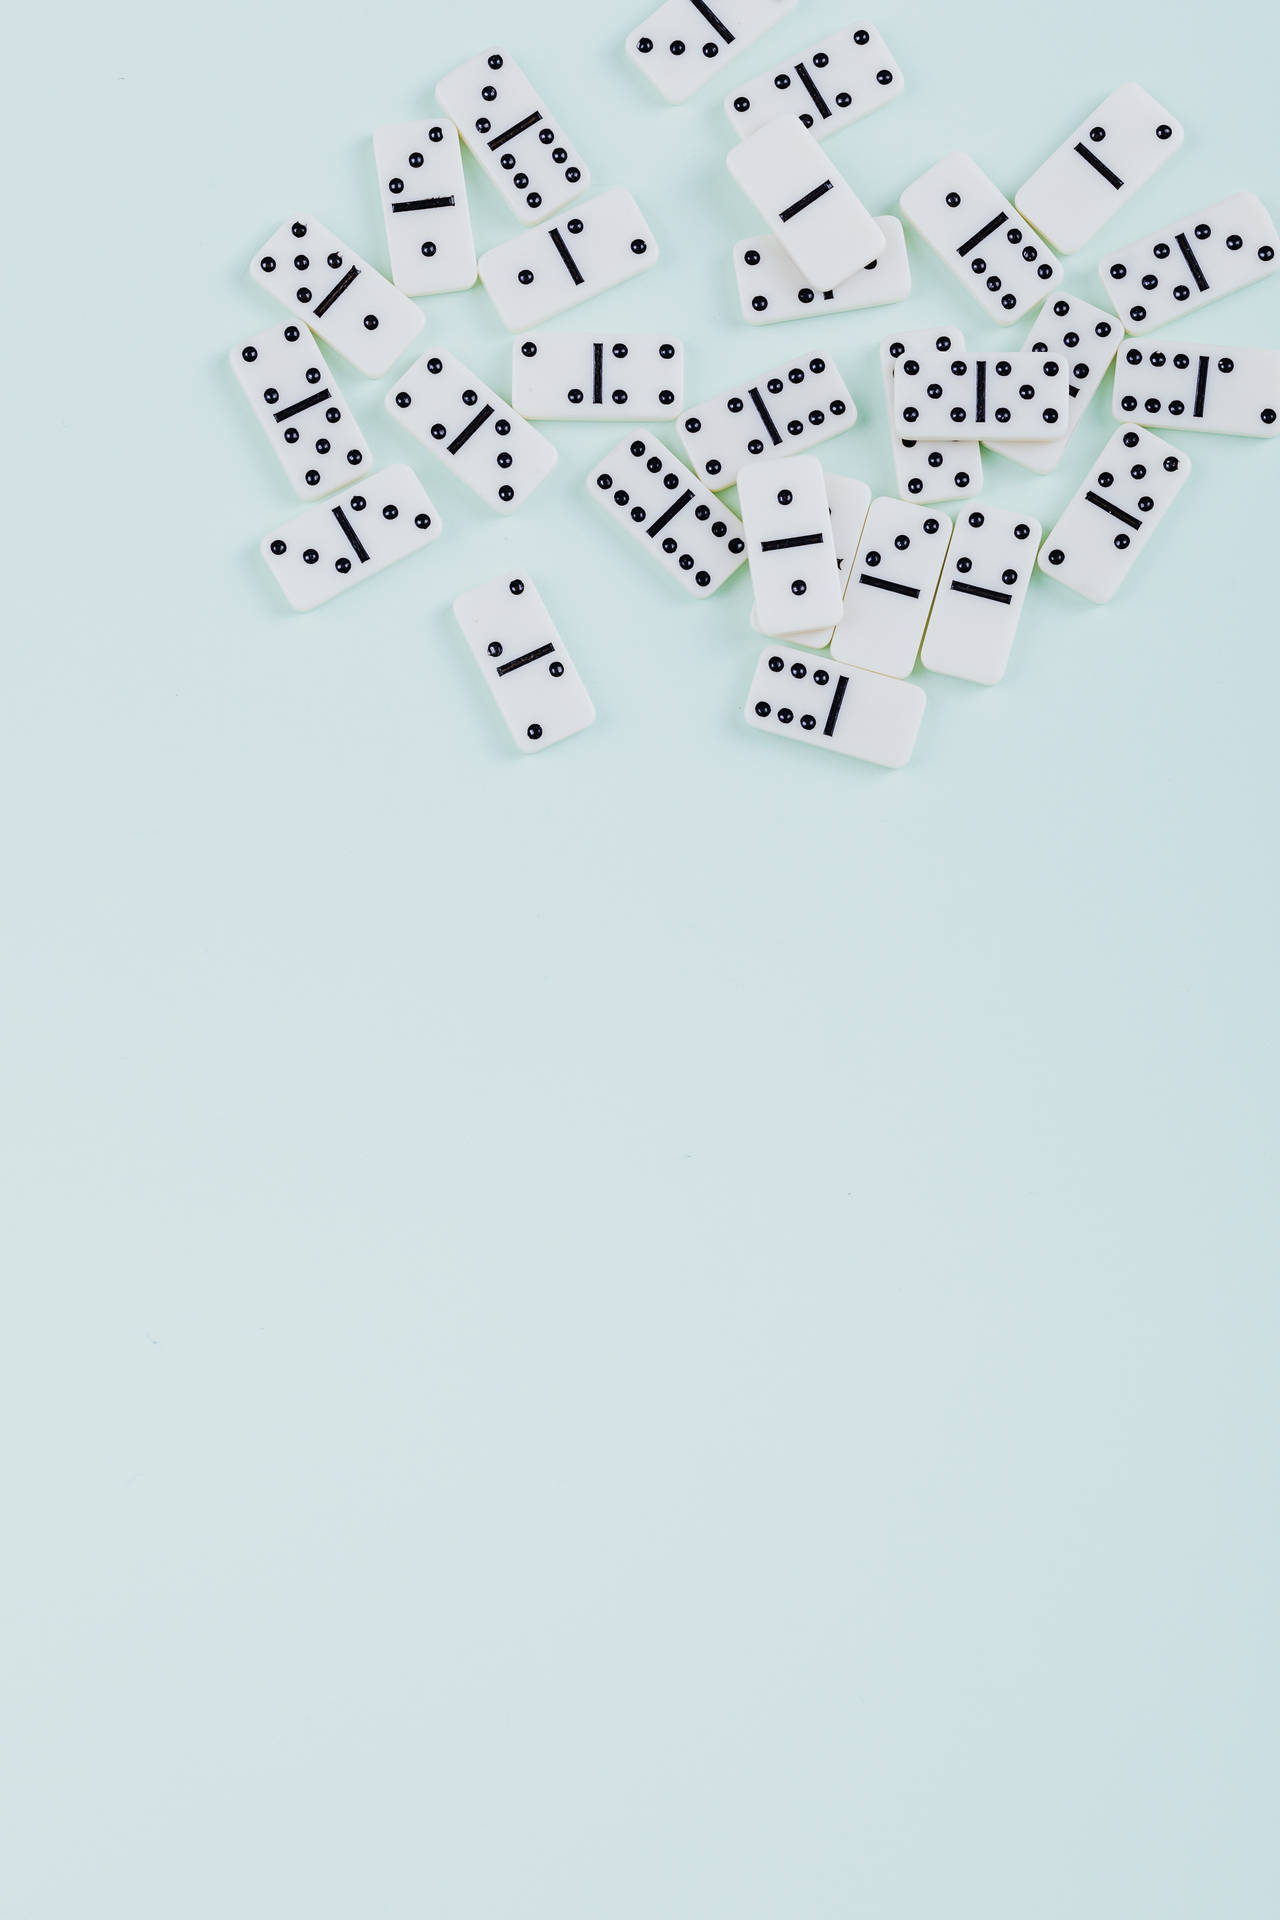 Scattered Dominos Background